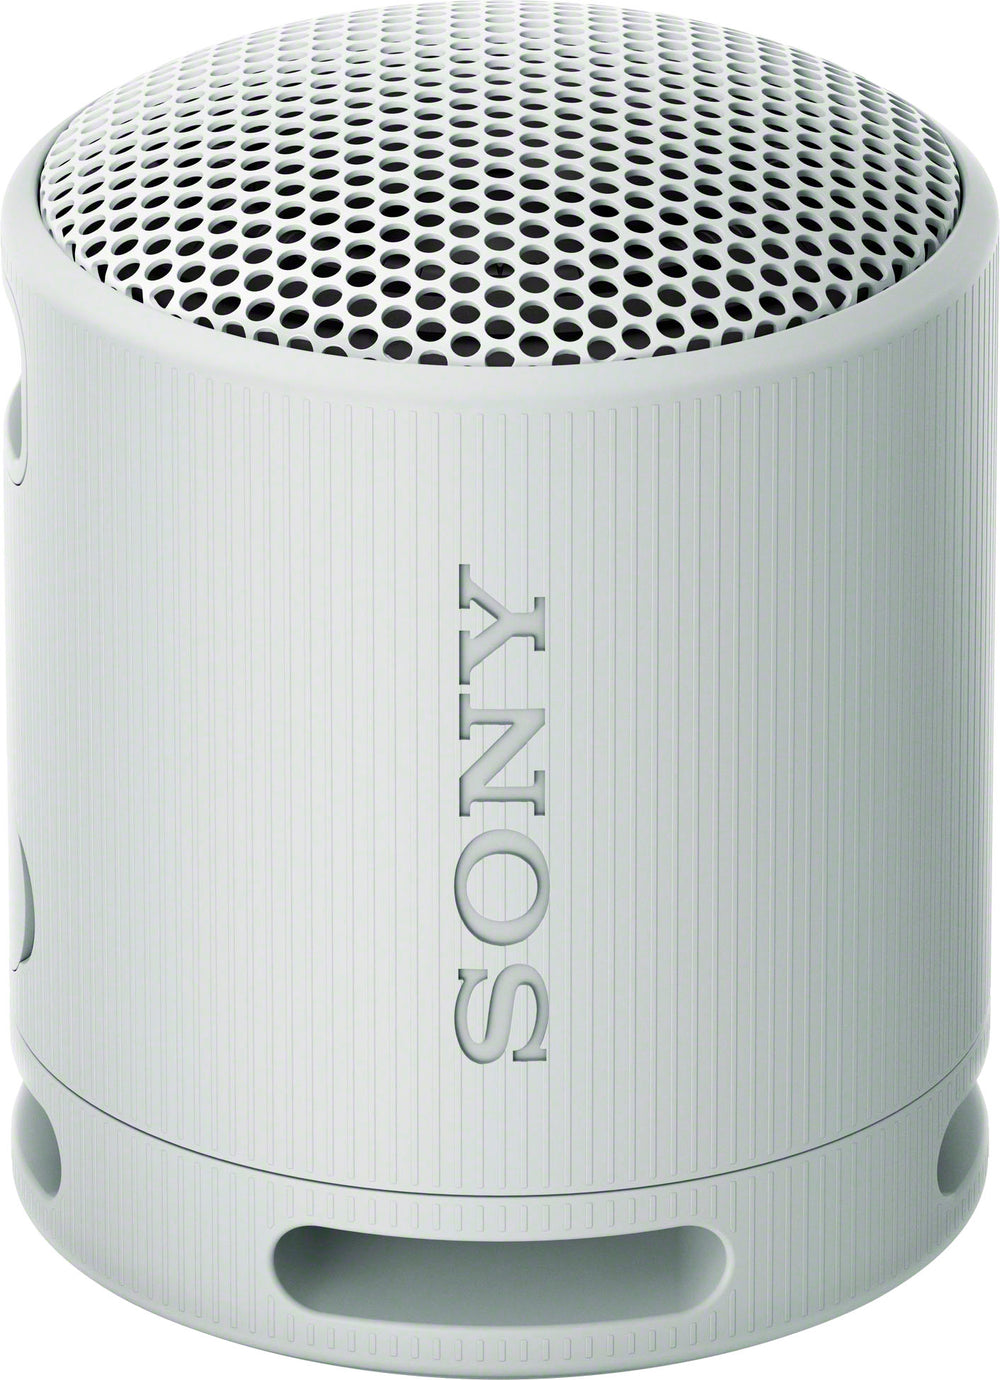 Sony - XB100 Compact Bluetooth Speaker - Light Gray_1